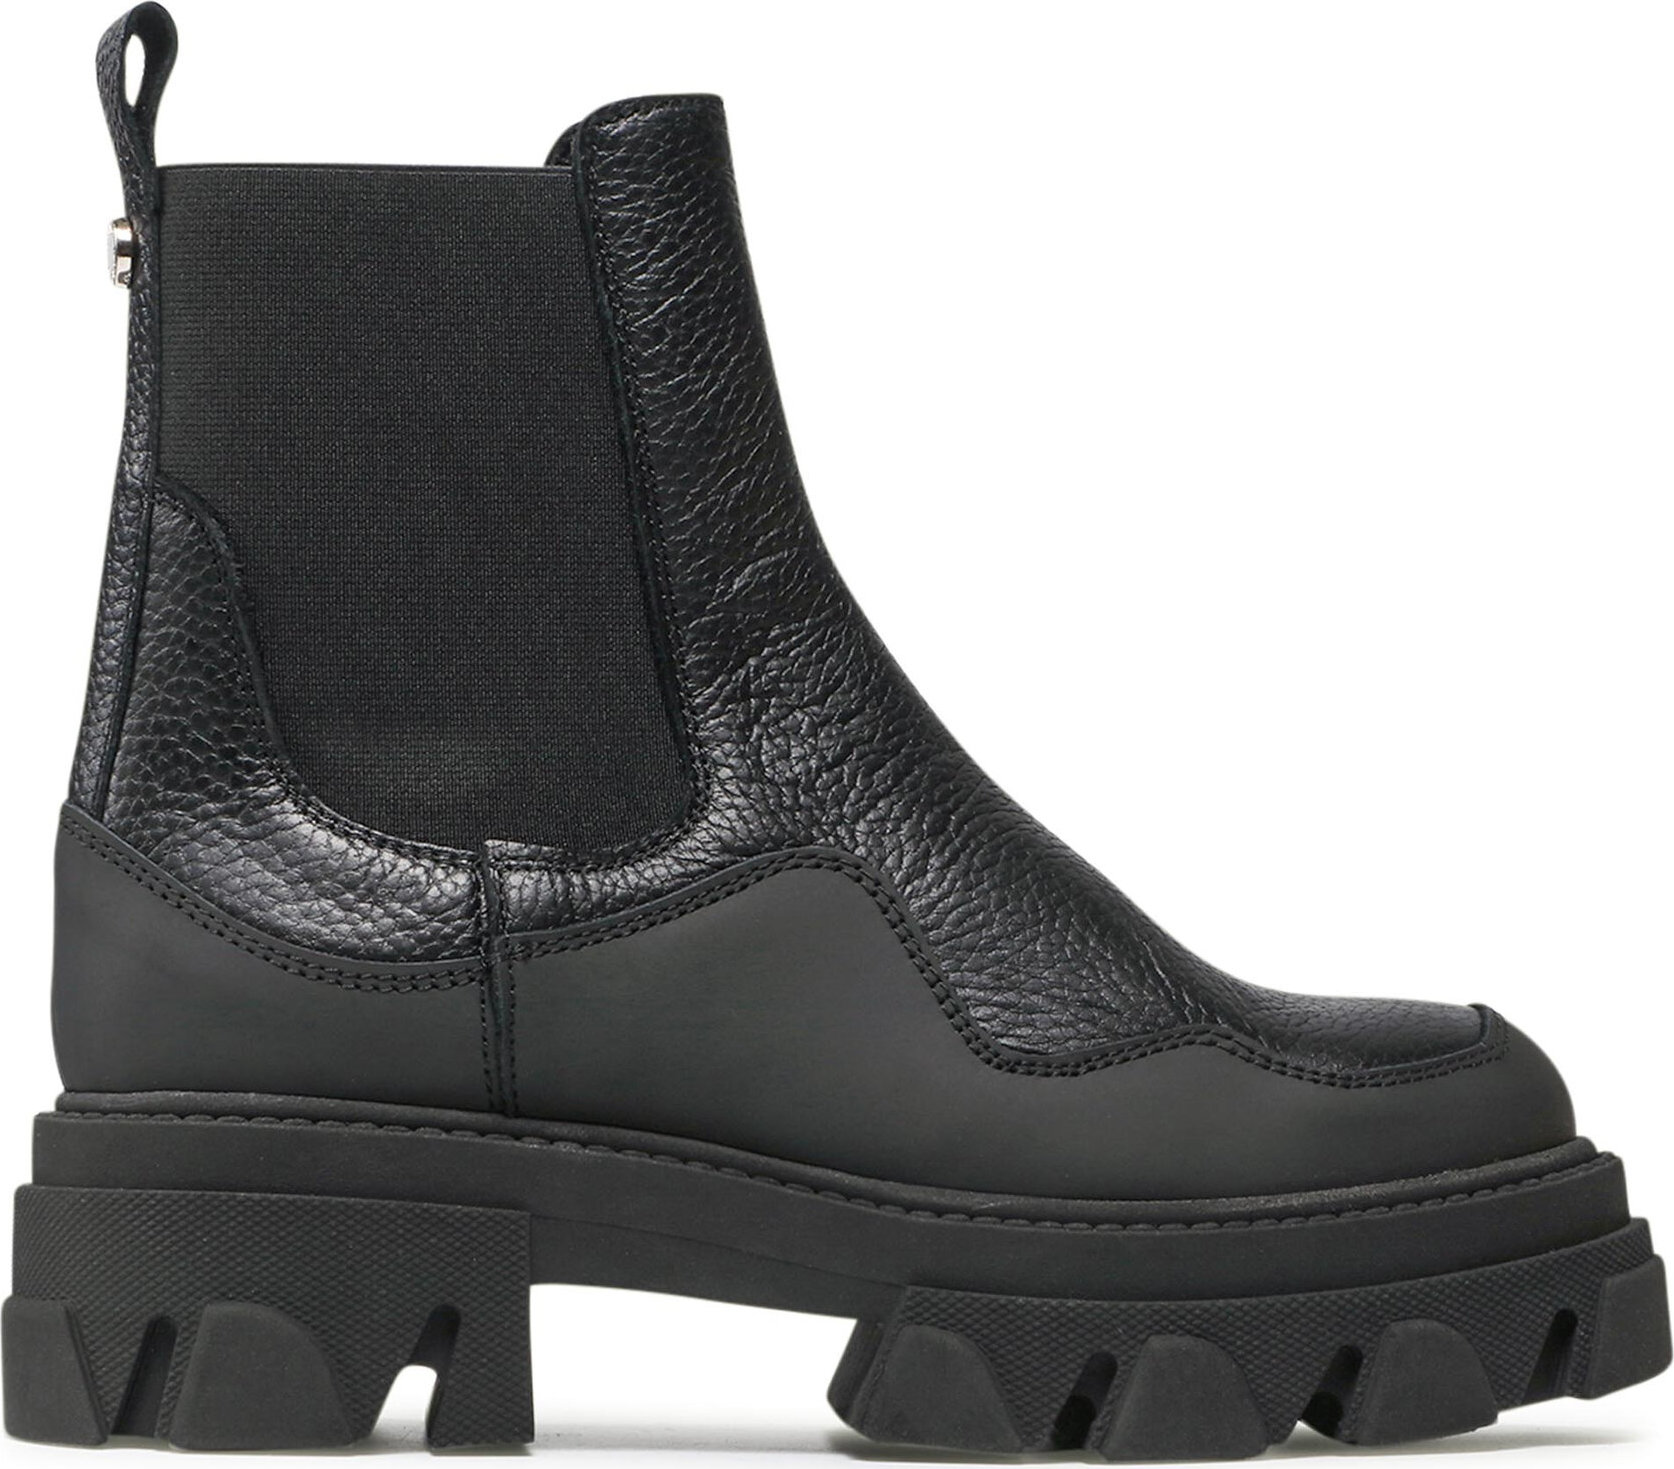 Kotníková obuv s elastickým prvkem Steve Madden Merilyn SM11001689-03007-017 Black Leather